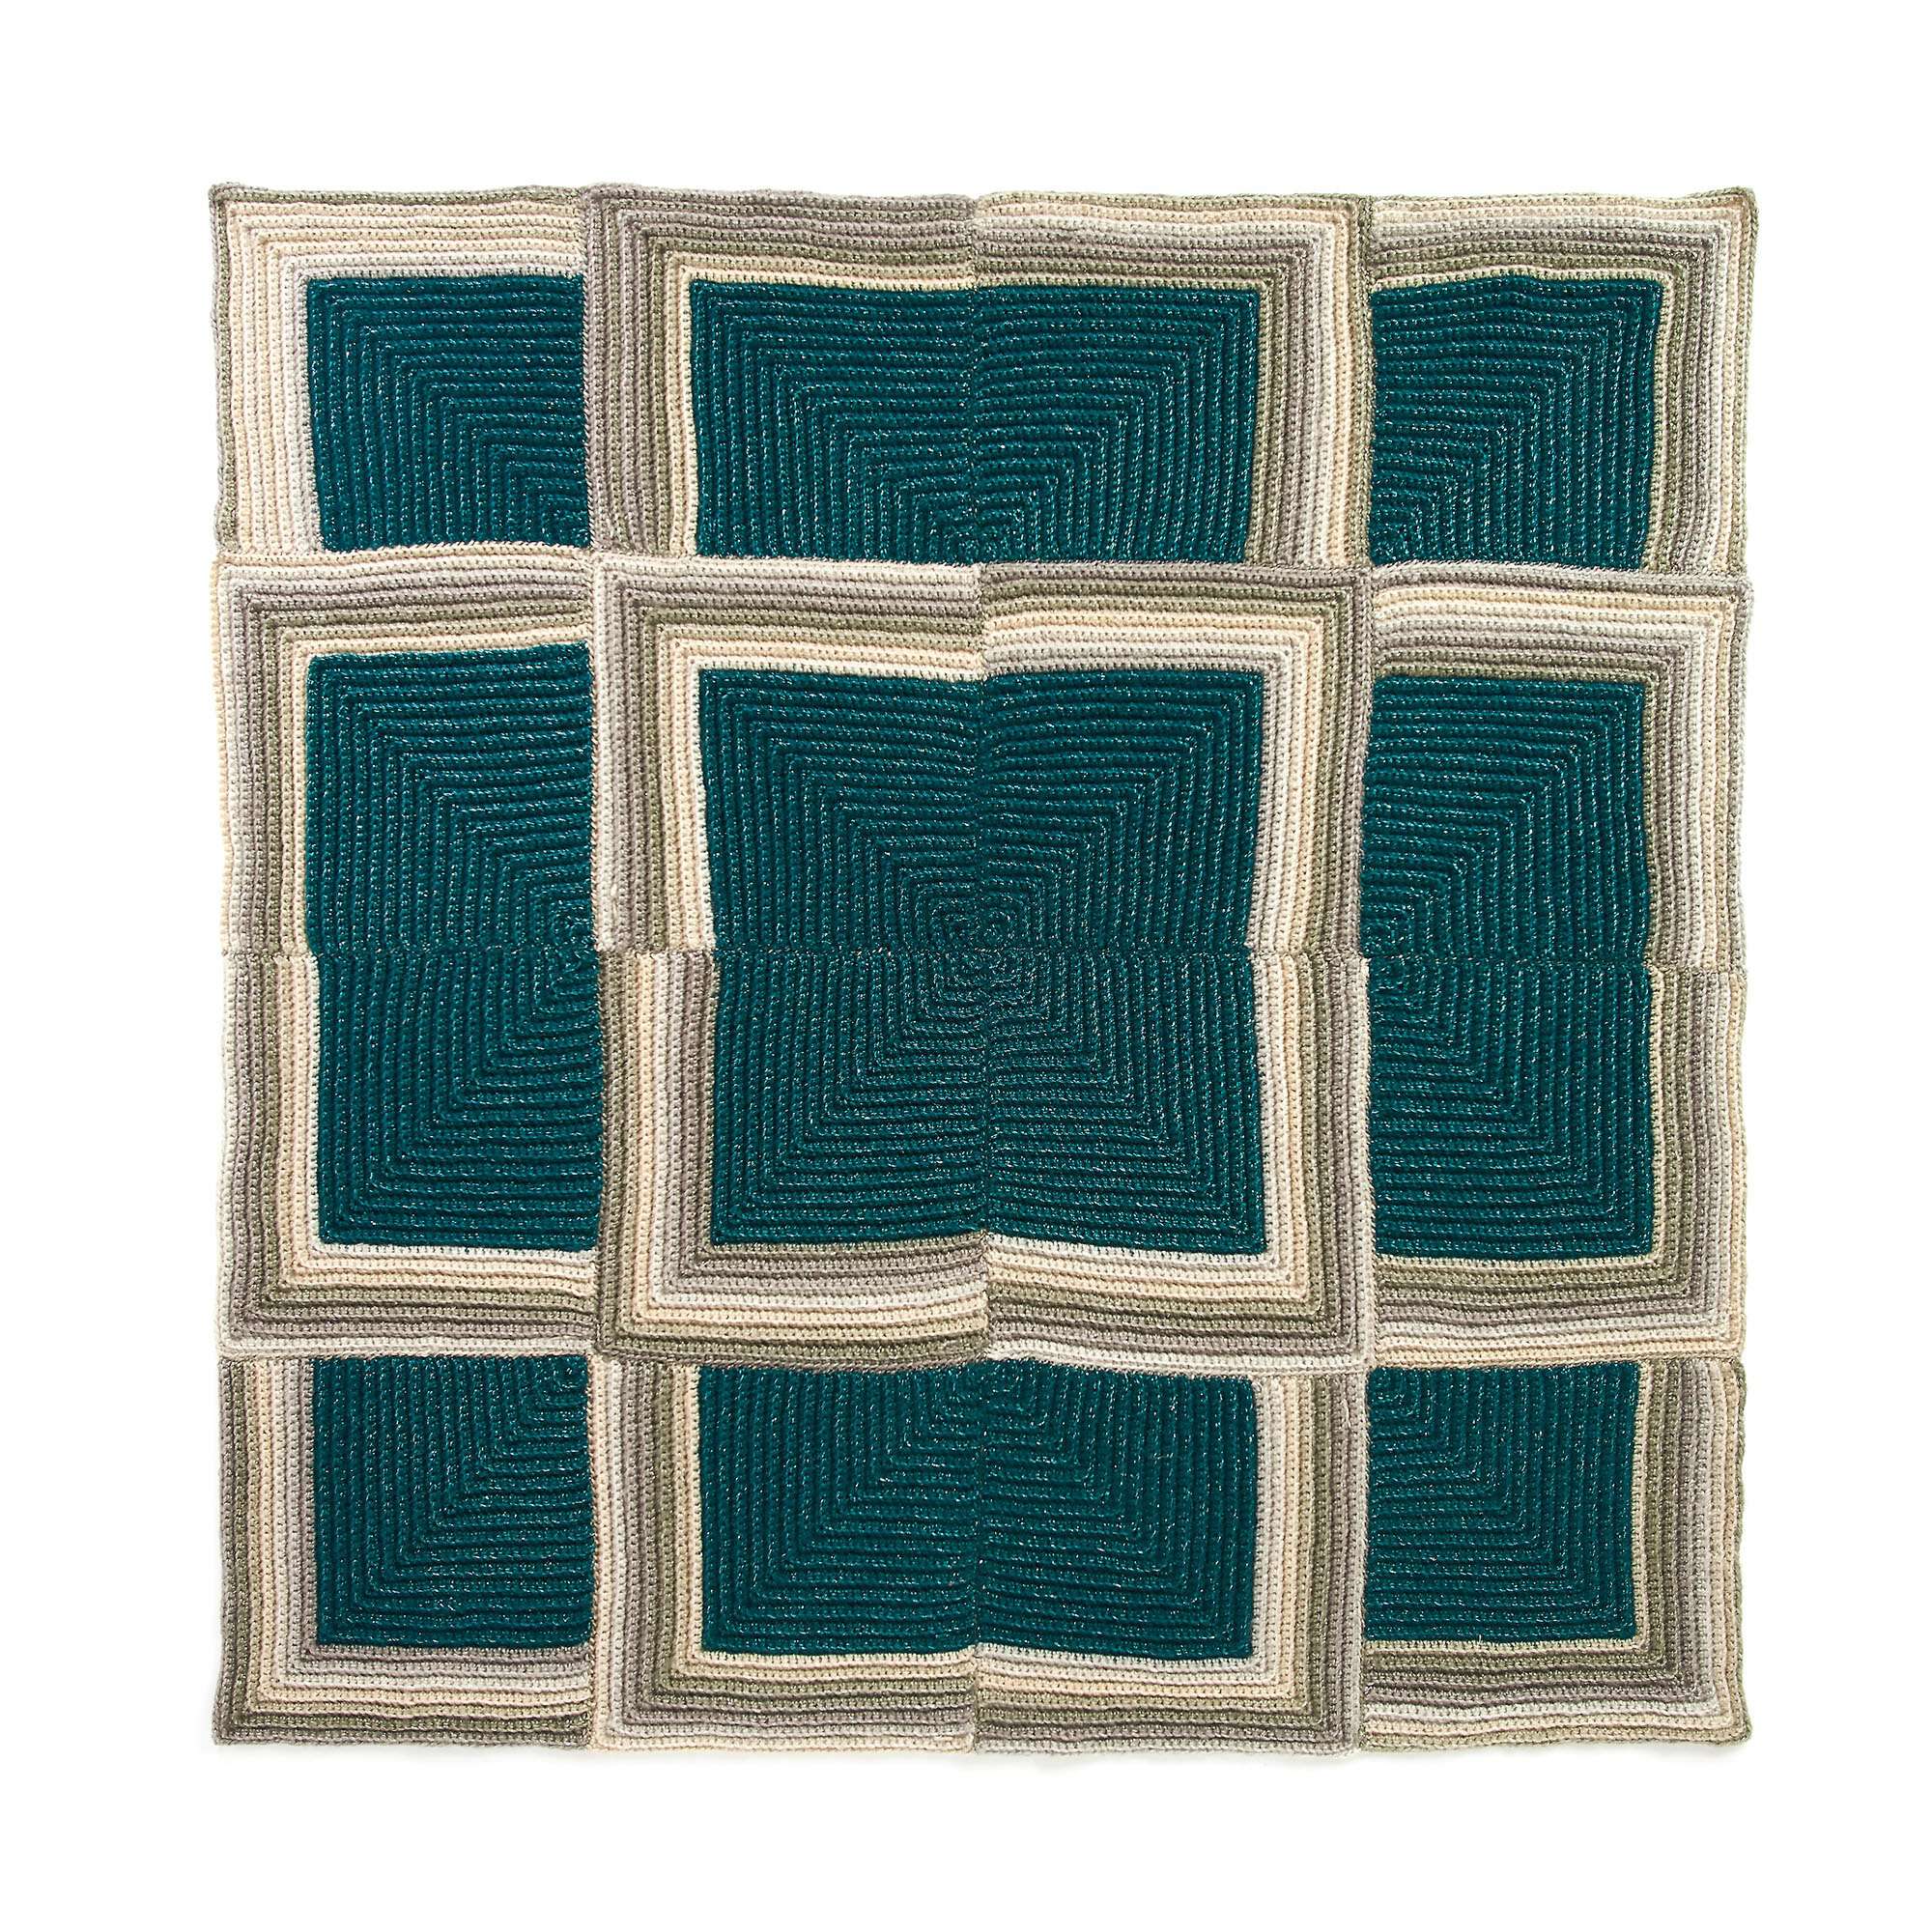 Caron Mitered Squares Crochet Afghan | Yarnspirations